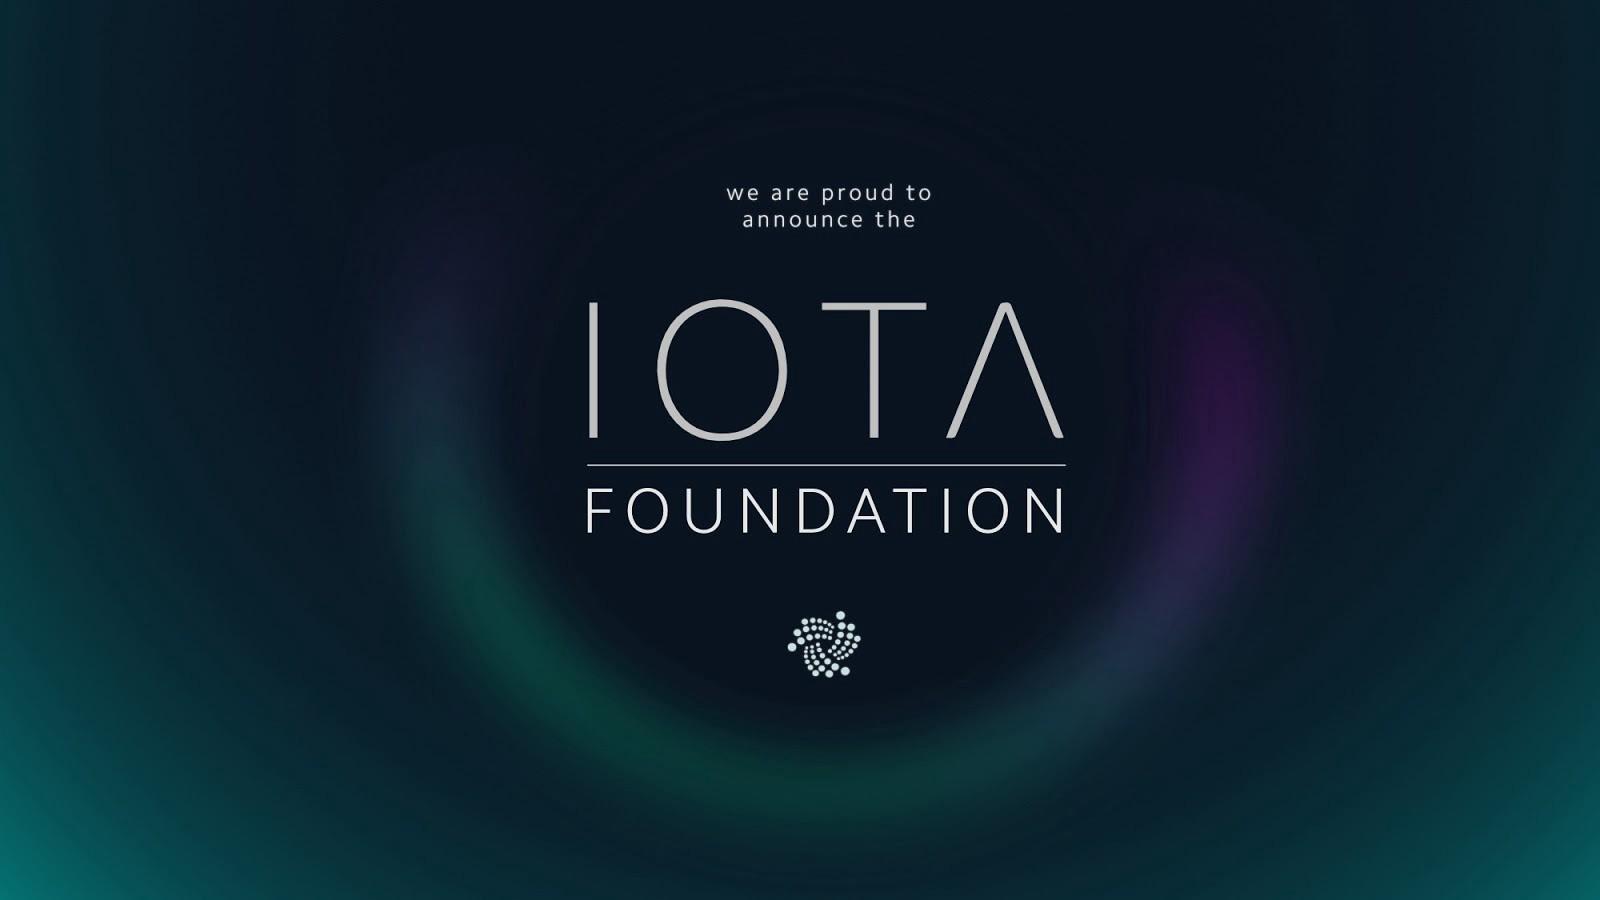 IOTA Foundation logo